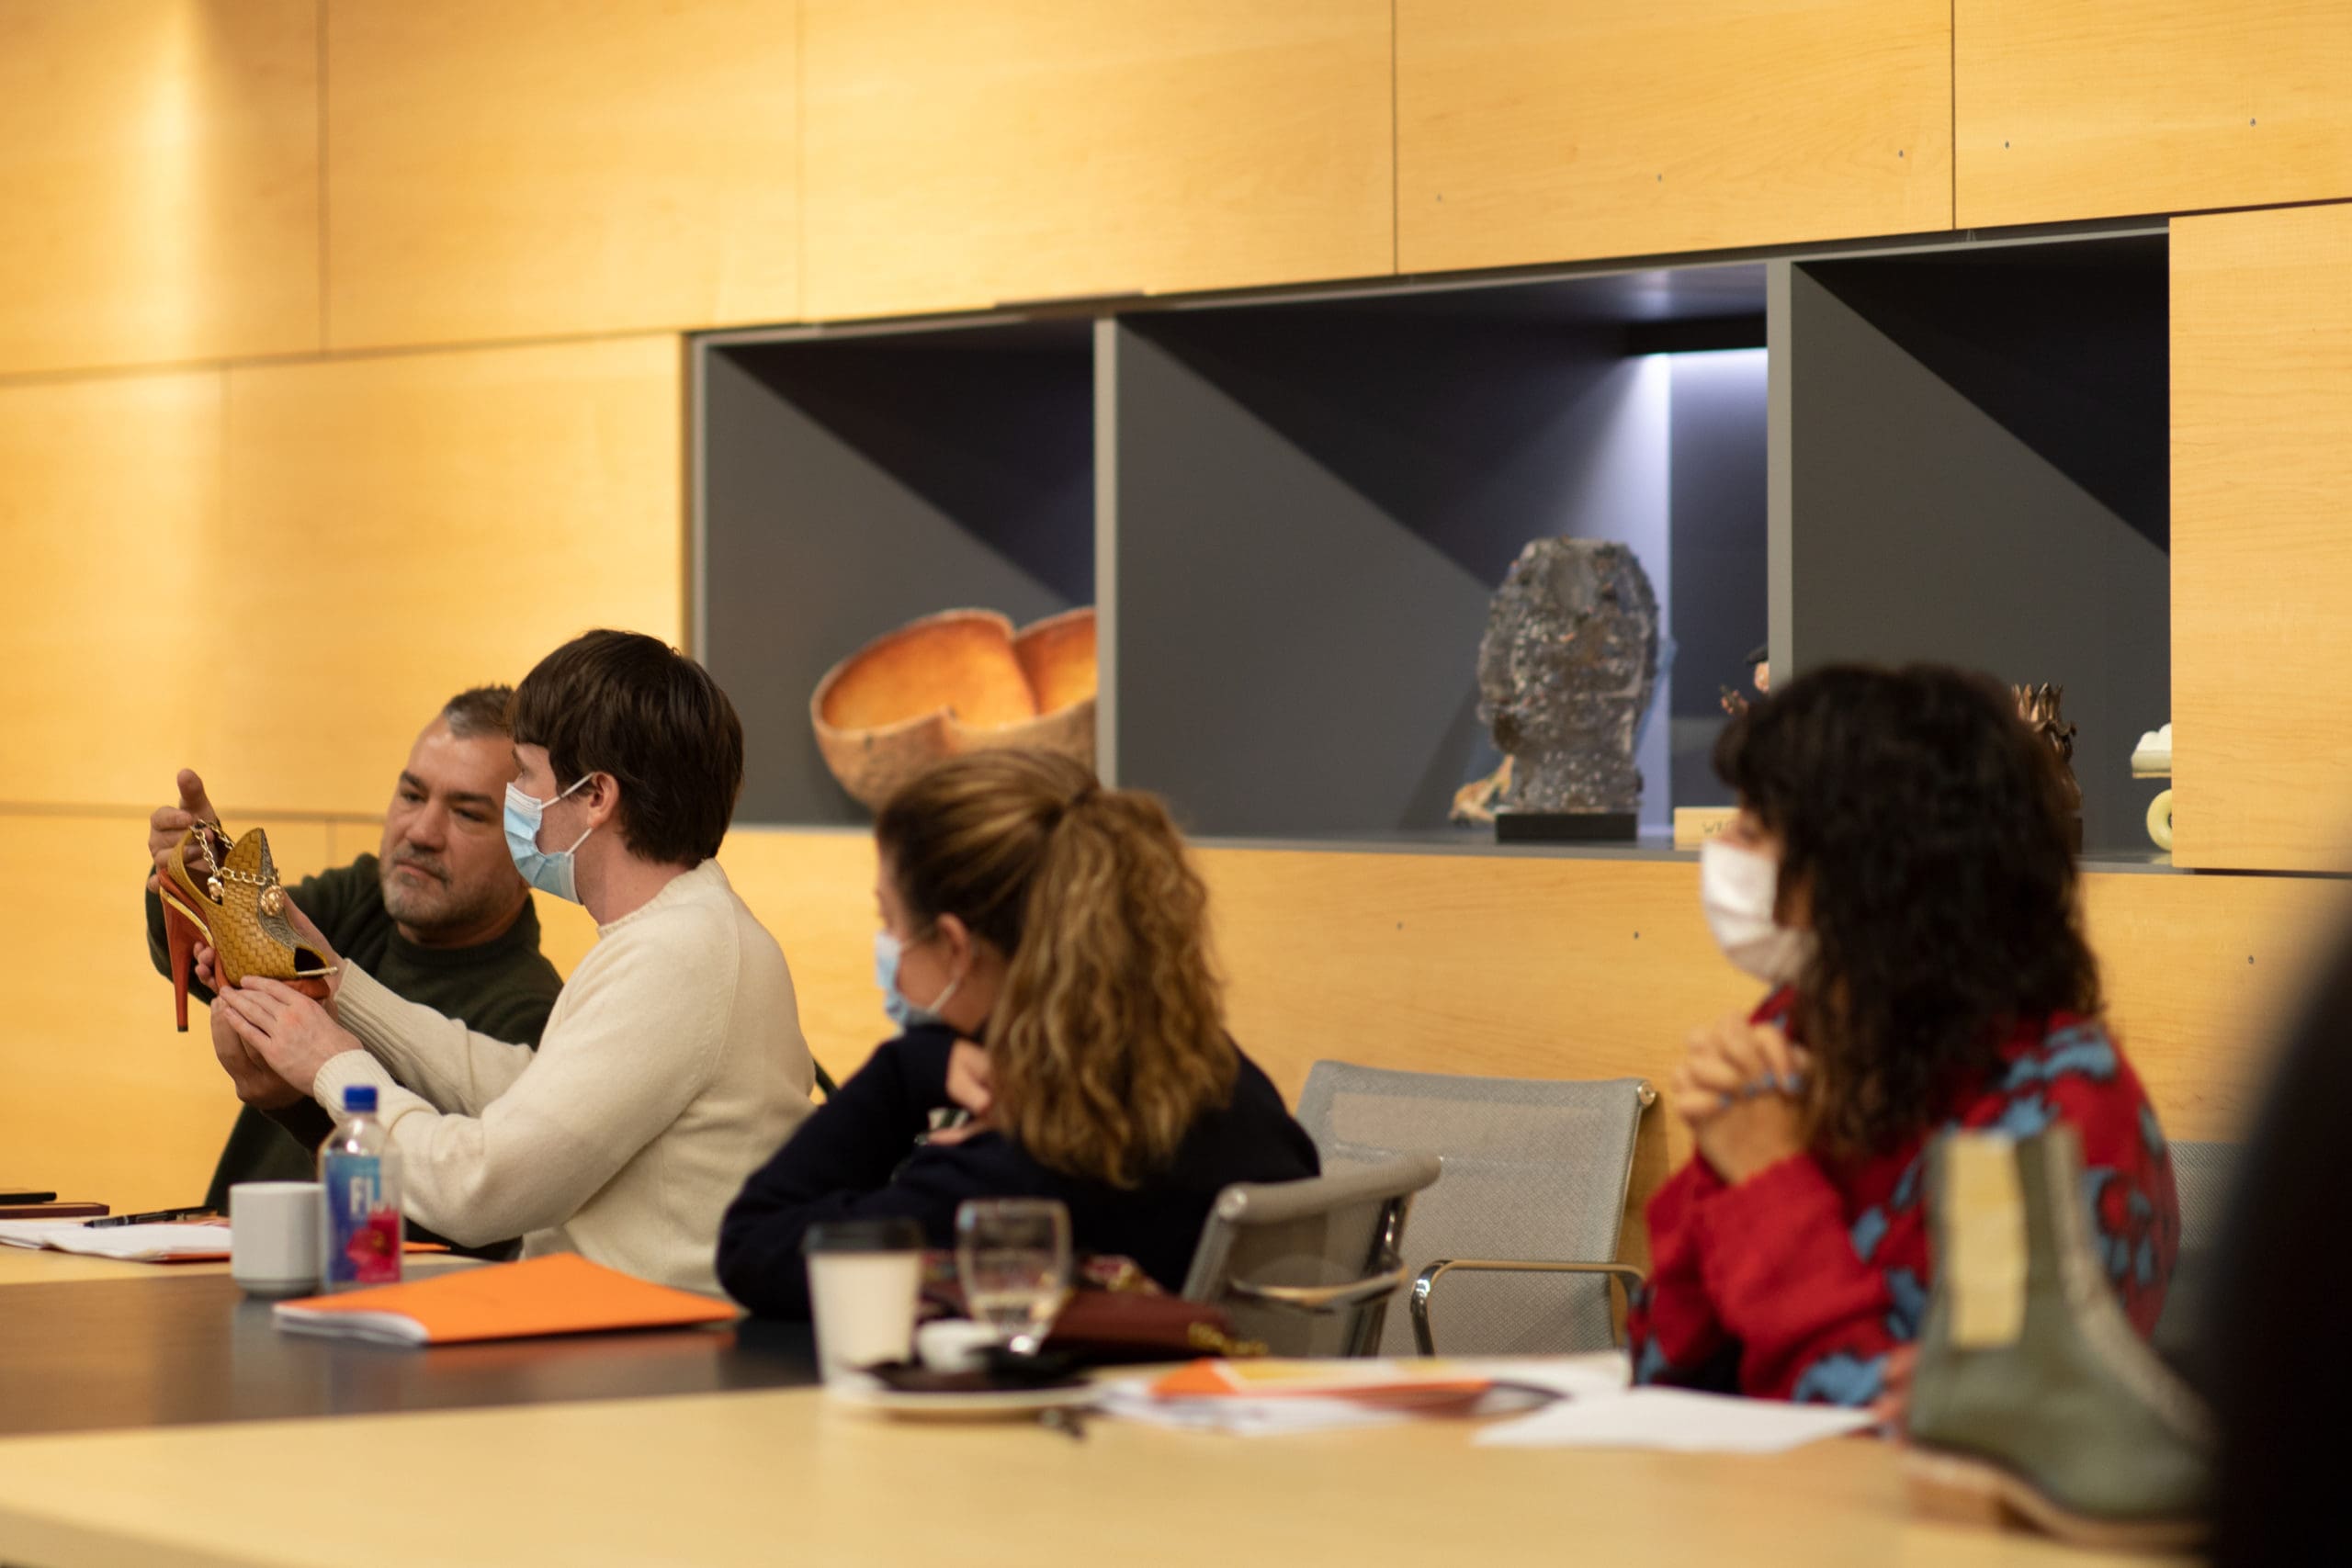 Stuart Weitzman Design team visits CCS during midterms